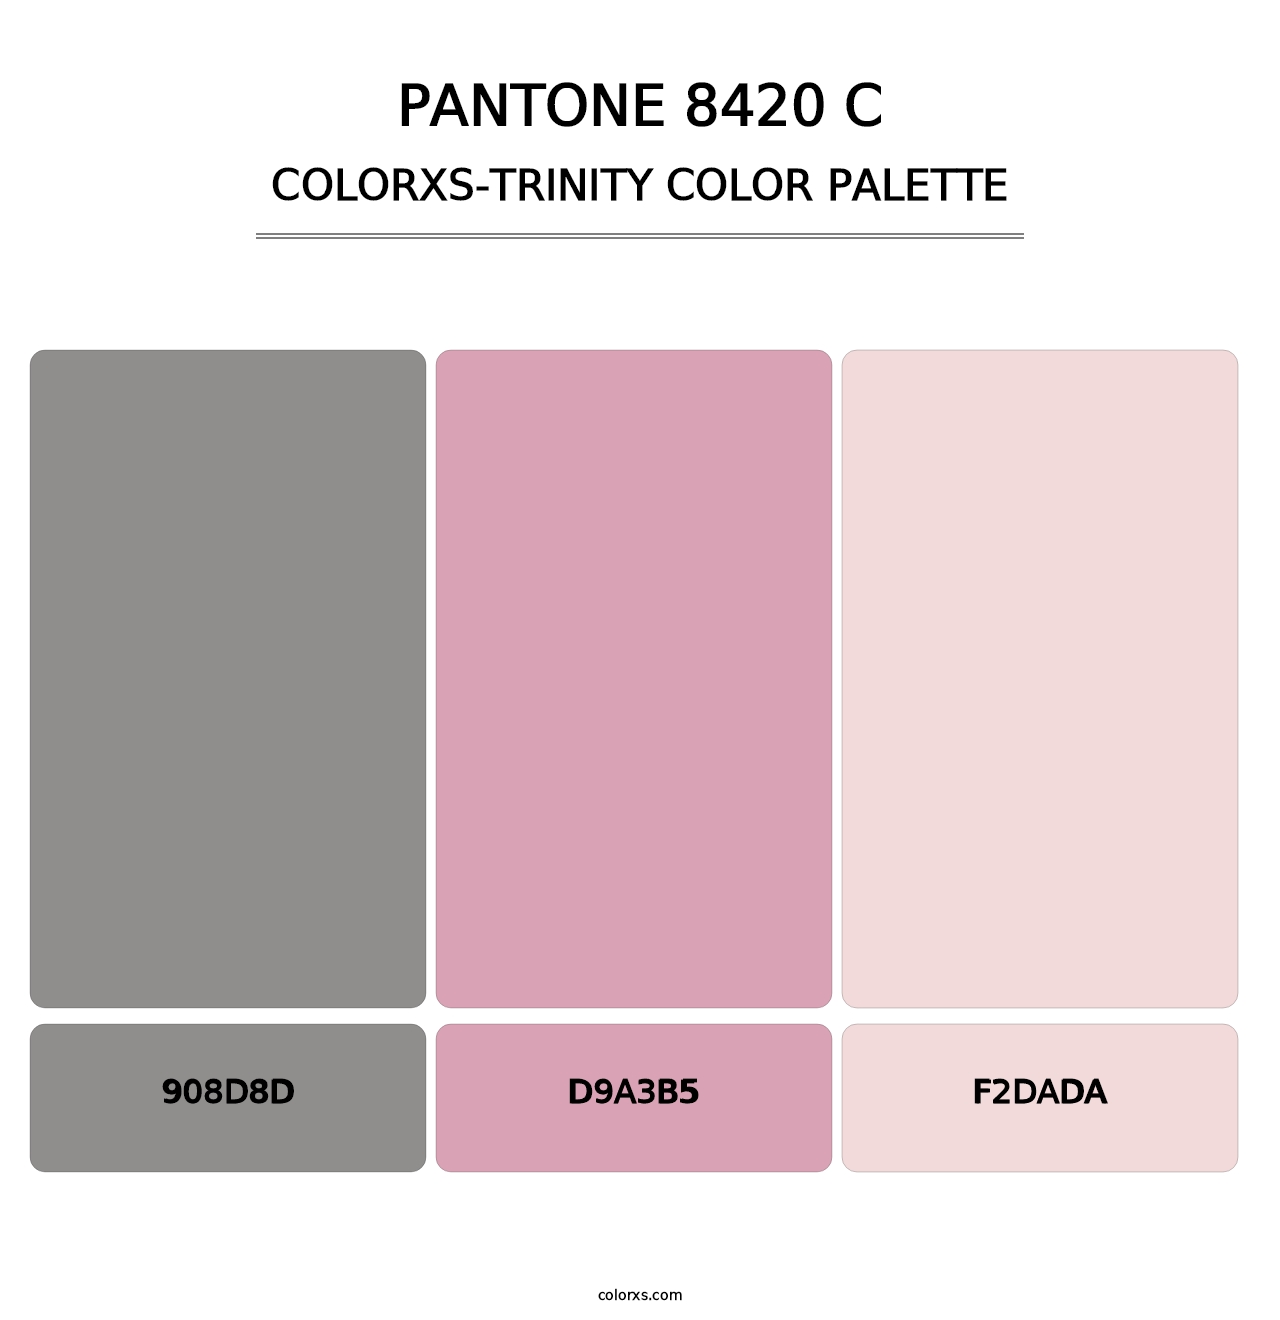 PANTONE 8420 C - Colorxs Trinity Palette